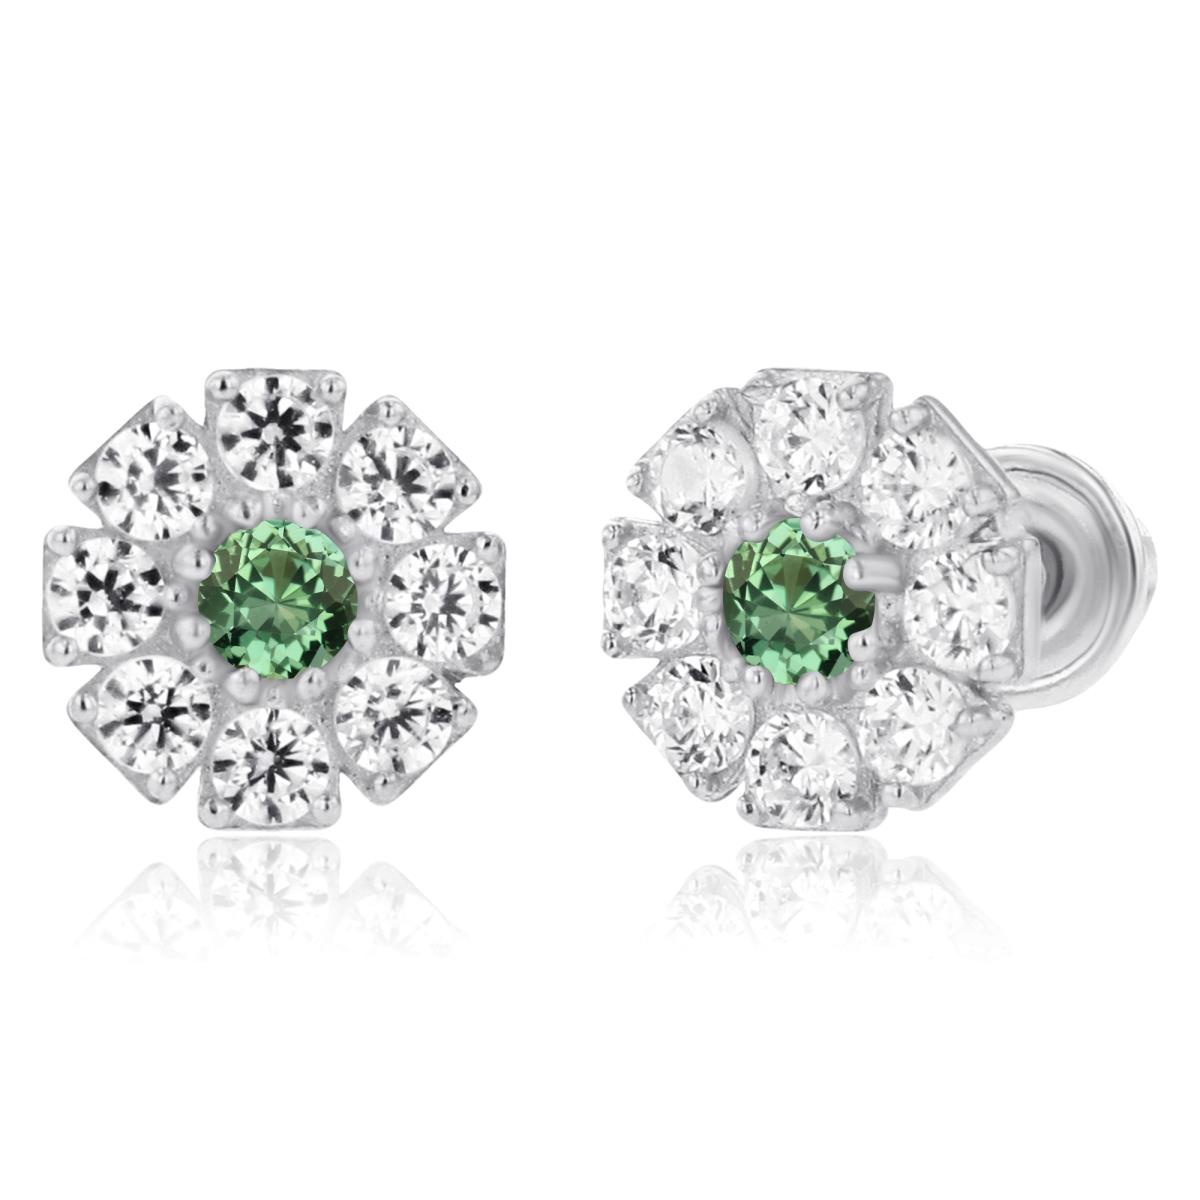 14K White Gold 2mm Round Created Green Sapphire & 1.5mm Created White Sapphire Flower Screwback Earrings